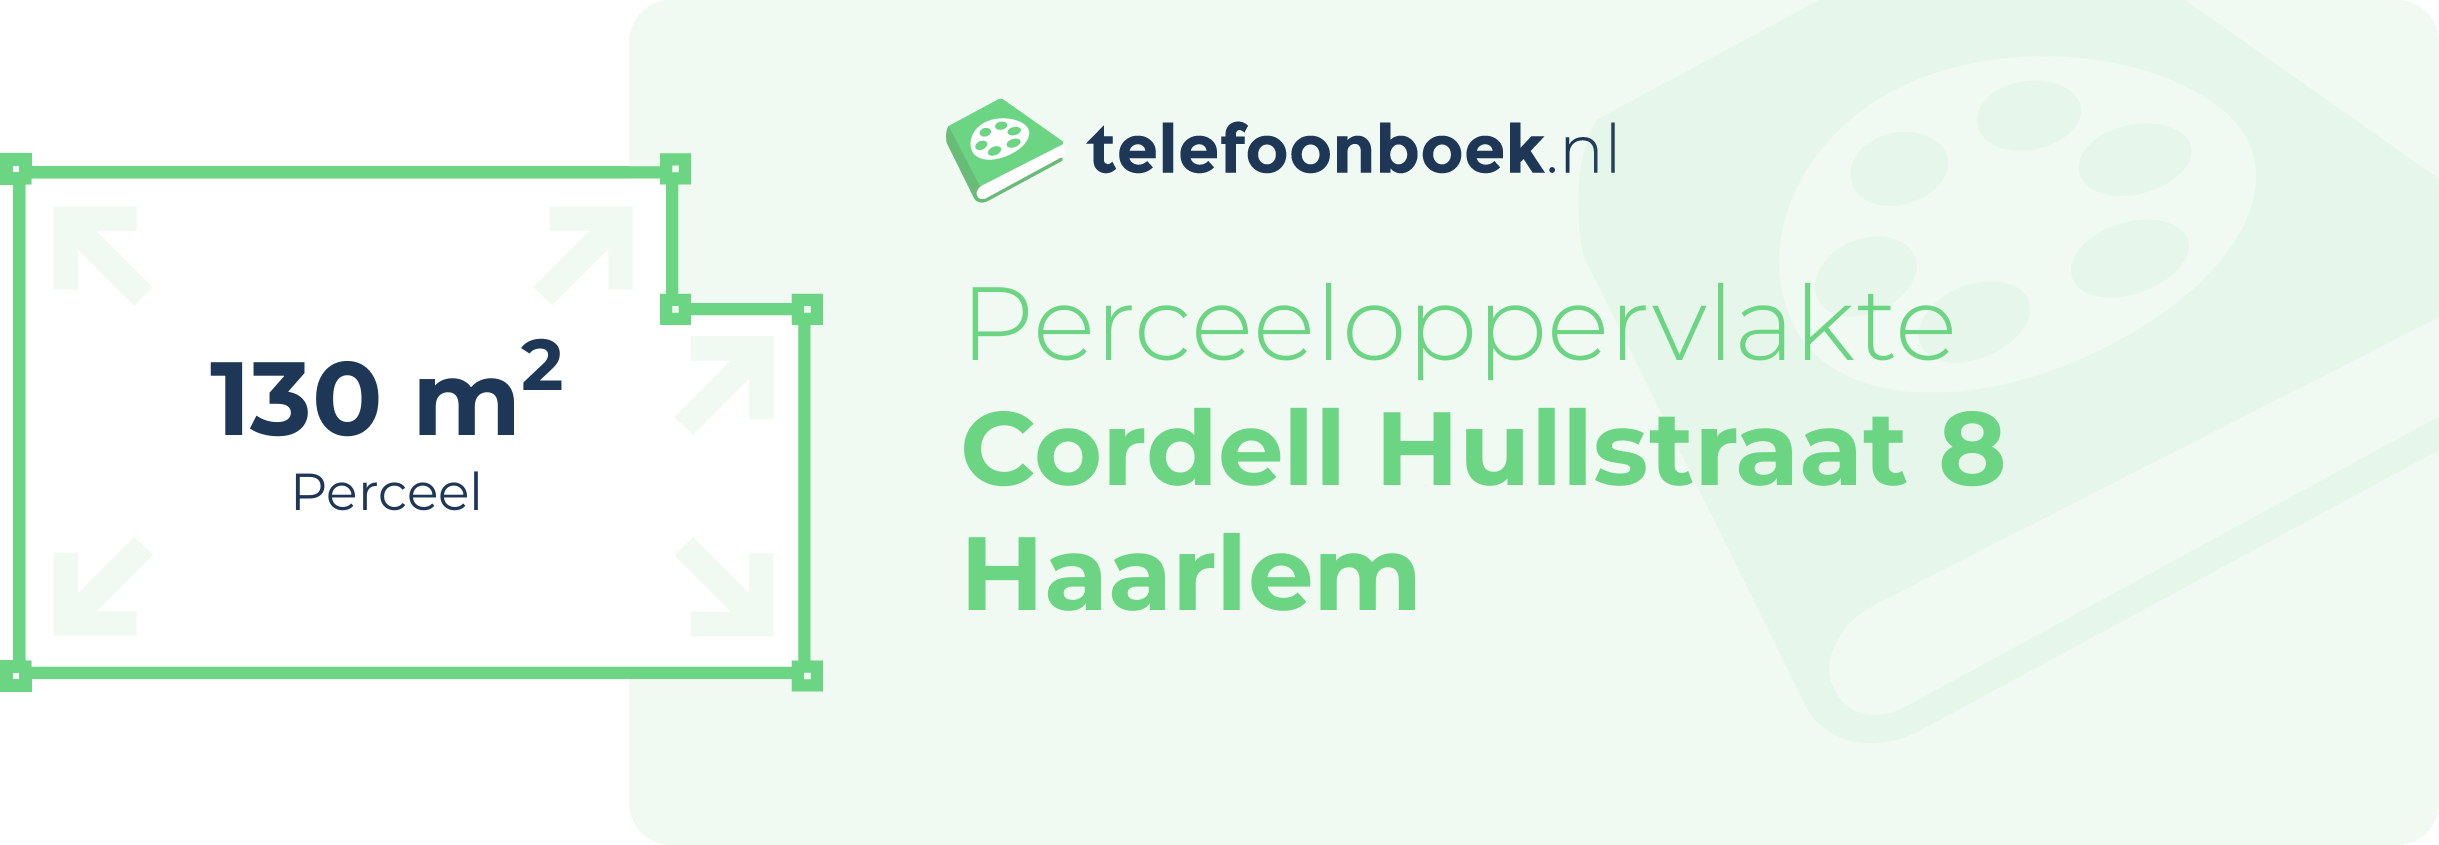 Perceeloppervlakte Cordell Hullstraat 8 Haarlem